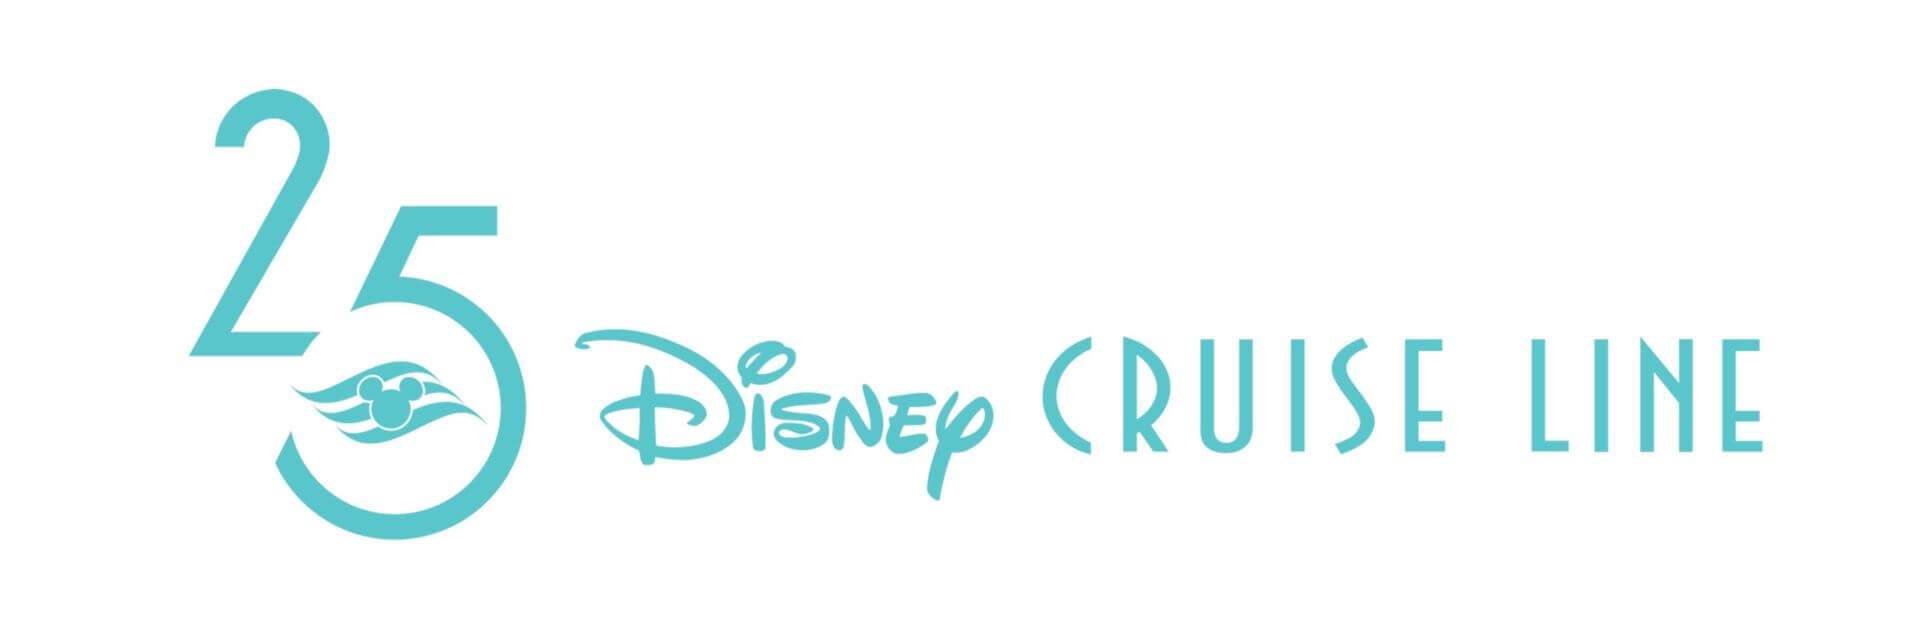 cruise line logo